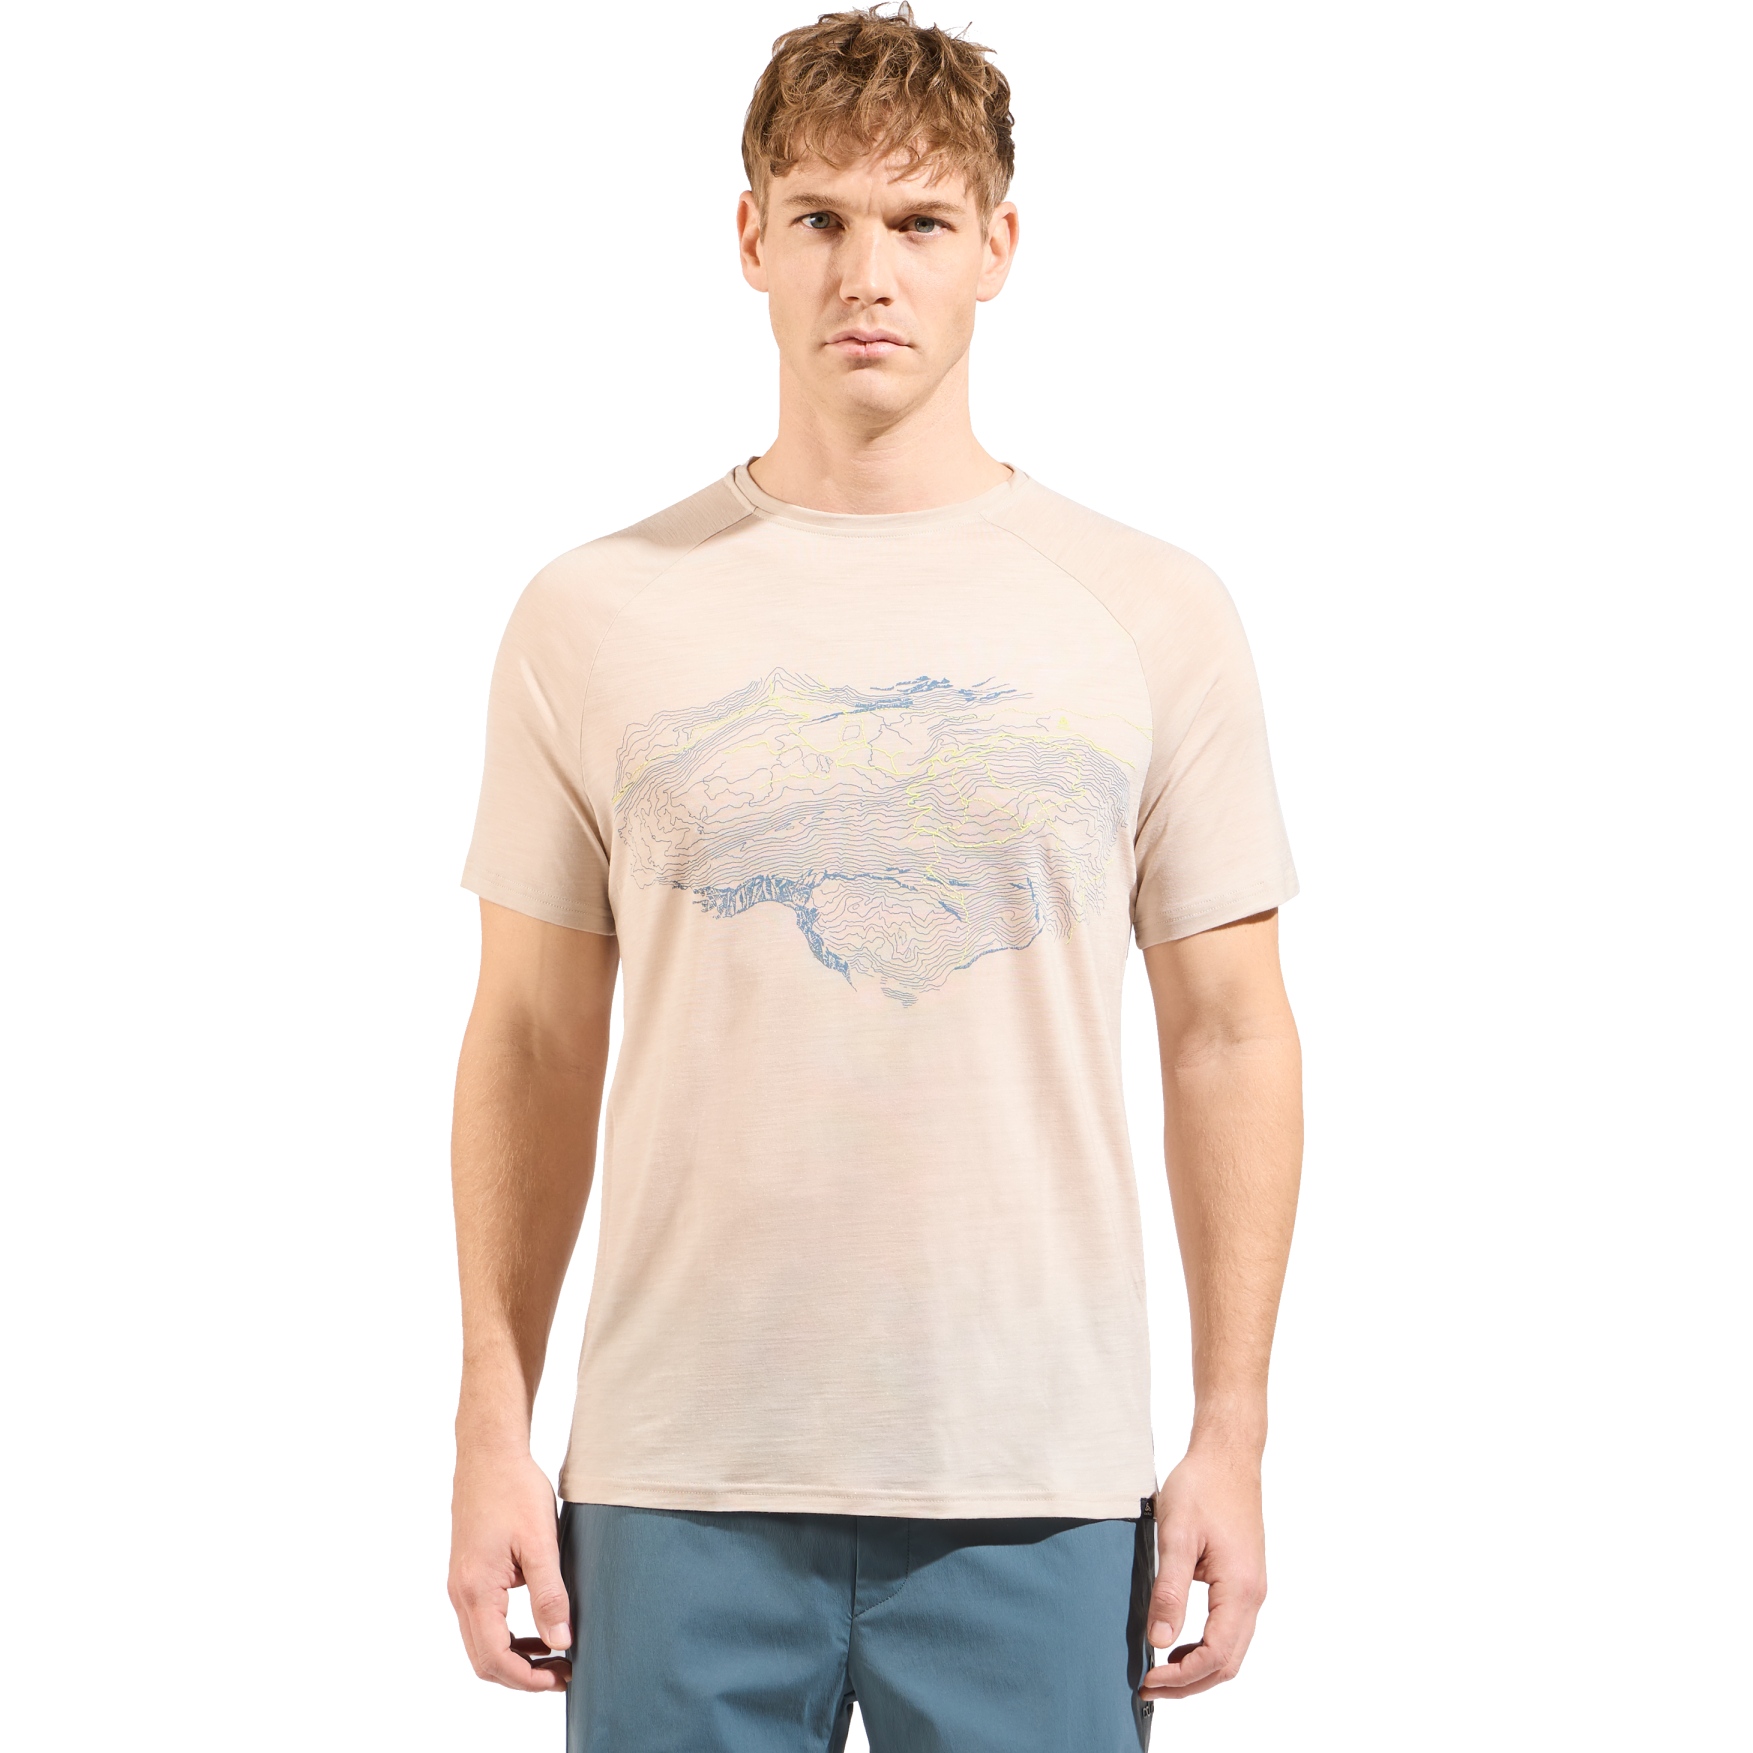 Produktbild von Odlo Ascent Performance Wool 130 Topography T-Shirt Herren - silver cloud melange